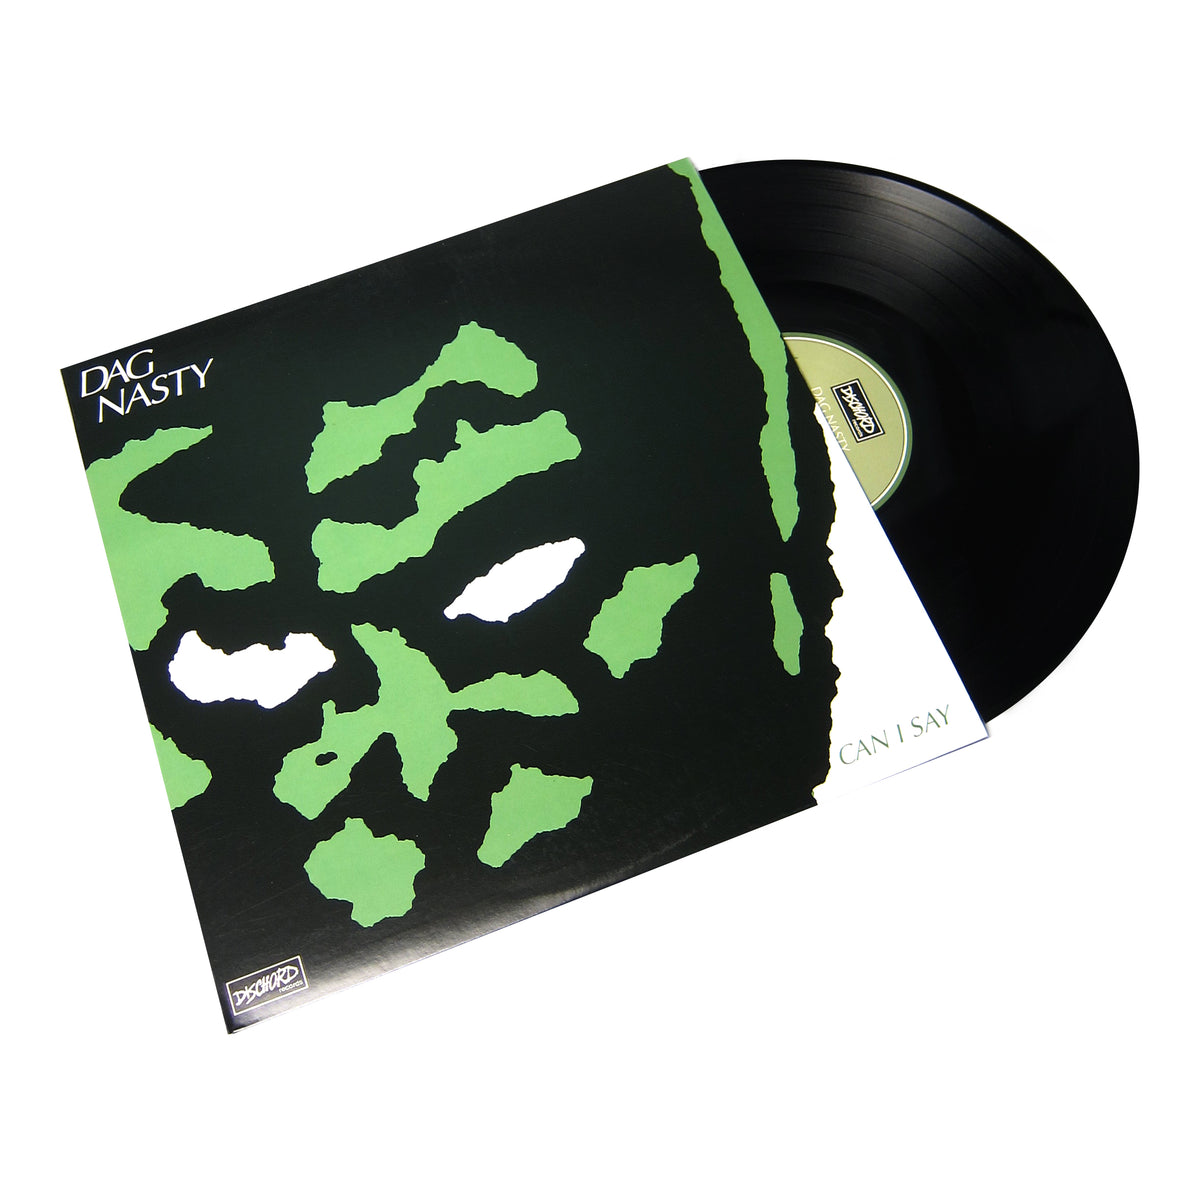 Dag Nasty: Can I Say Vinyl LP — TurntableLab.com